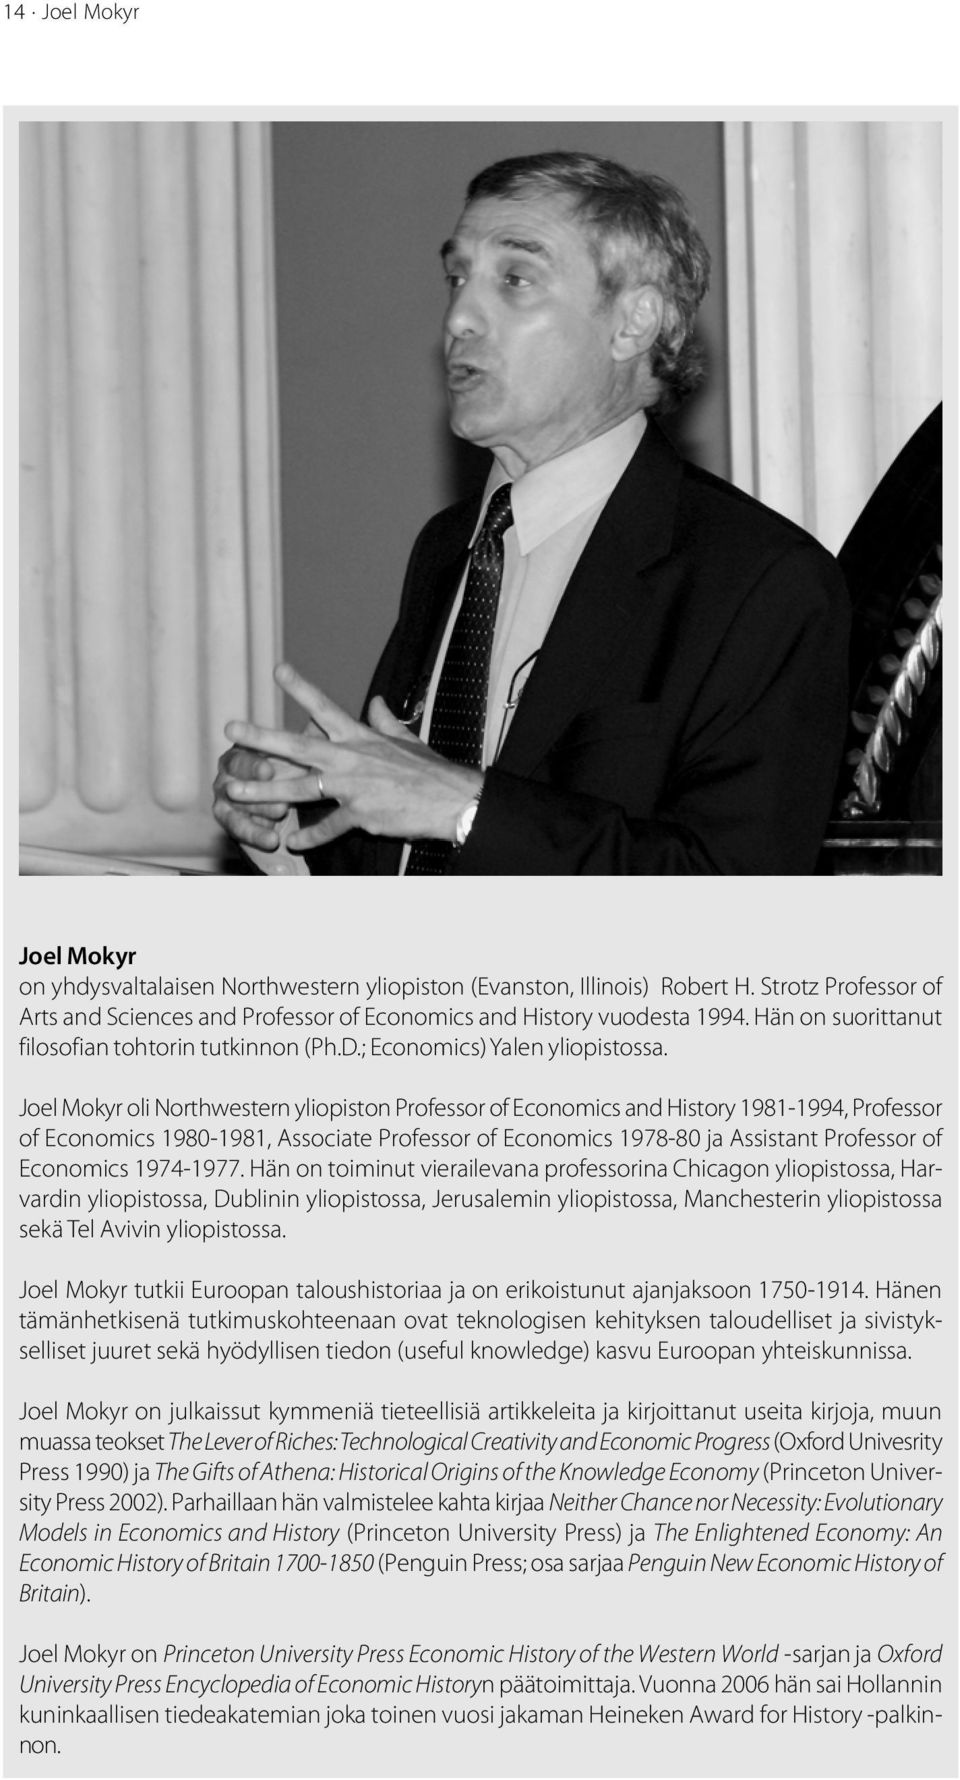 Joel Mokyr oli Northwestern yliopiston Professor of Economics and History 1981-1994, Professor of Economics 1980-1981, Associate Professor of Economics 1978-80 ja Assistant Professor of Economics